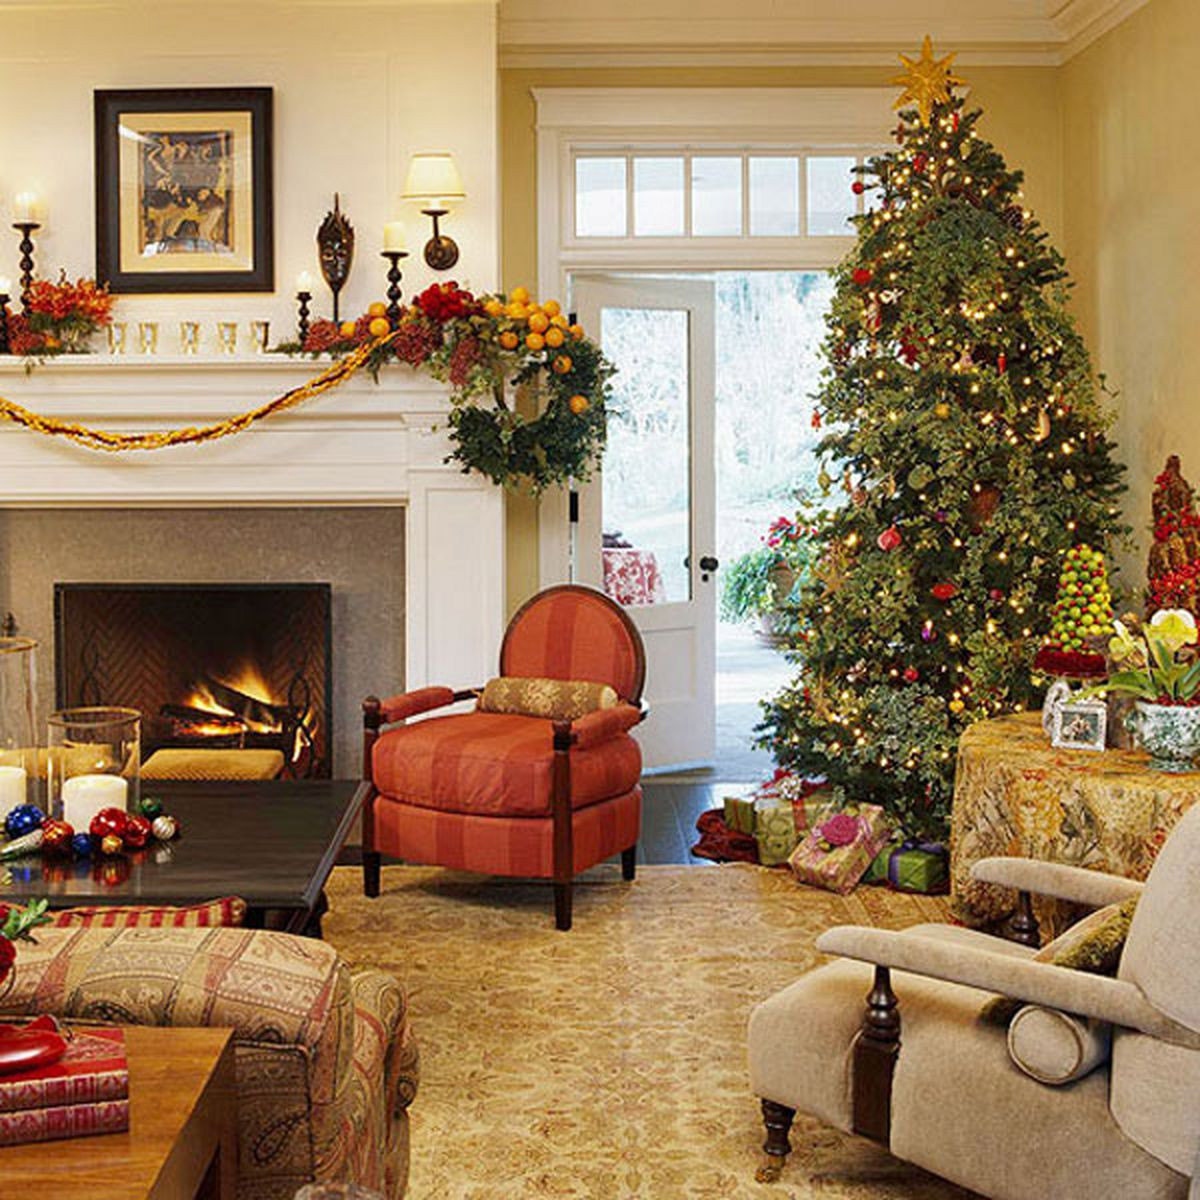 Christmas Living Room Decoration Ideas
 Magical Christmas living room ideas